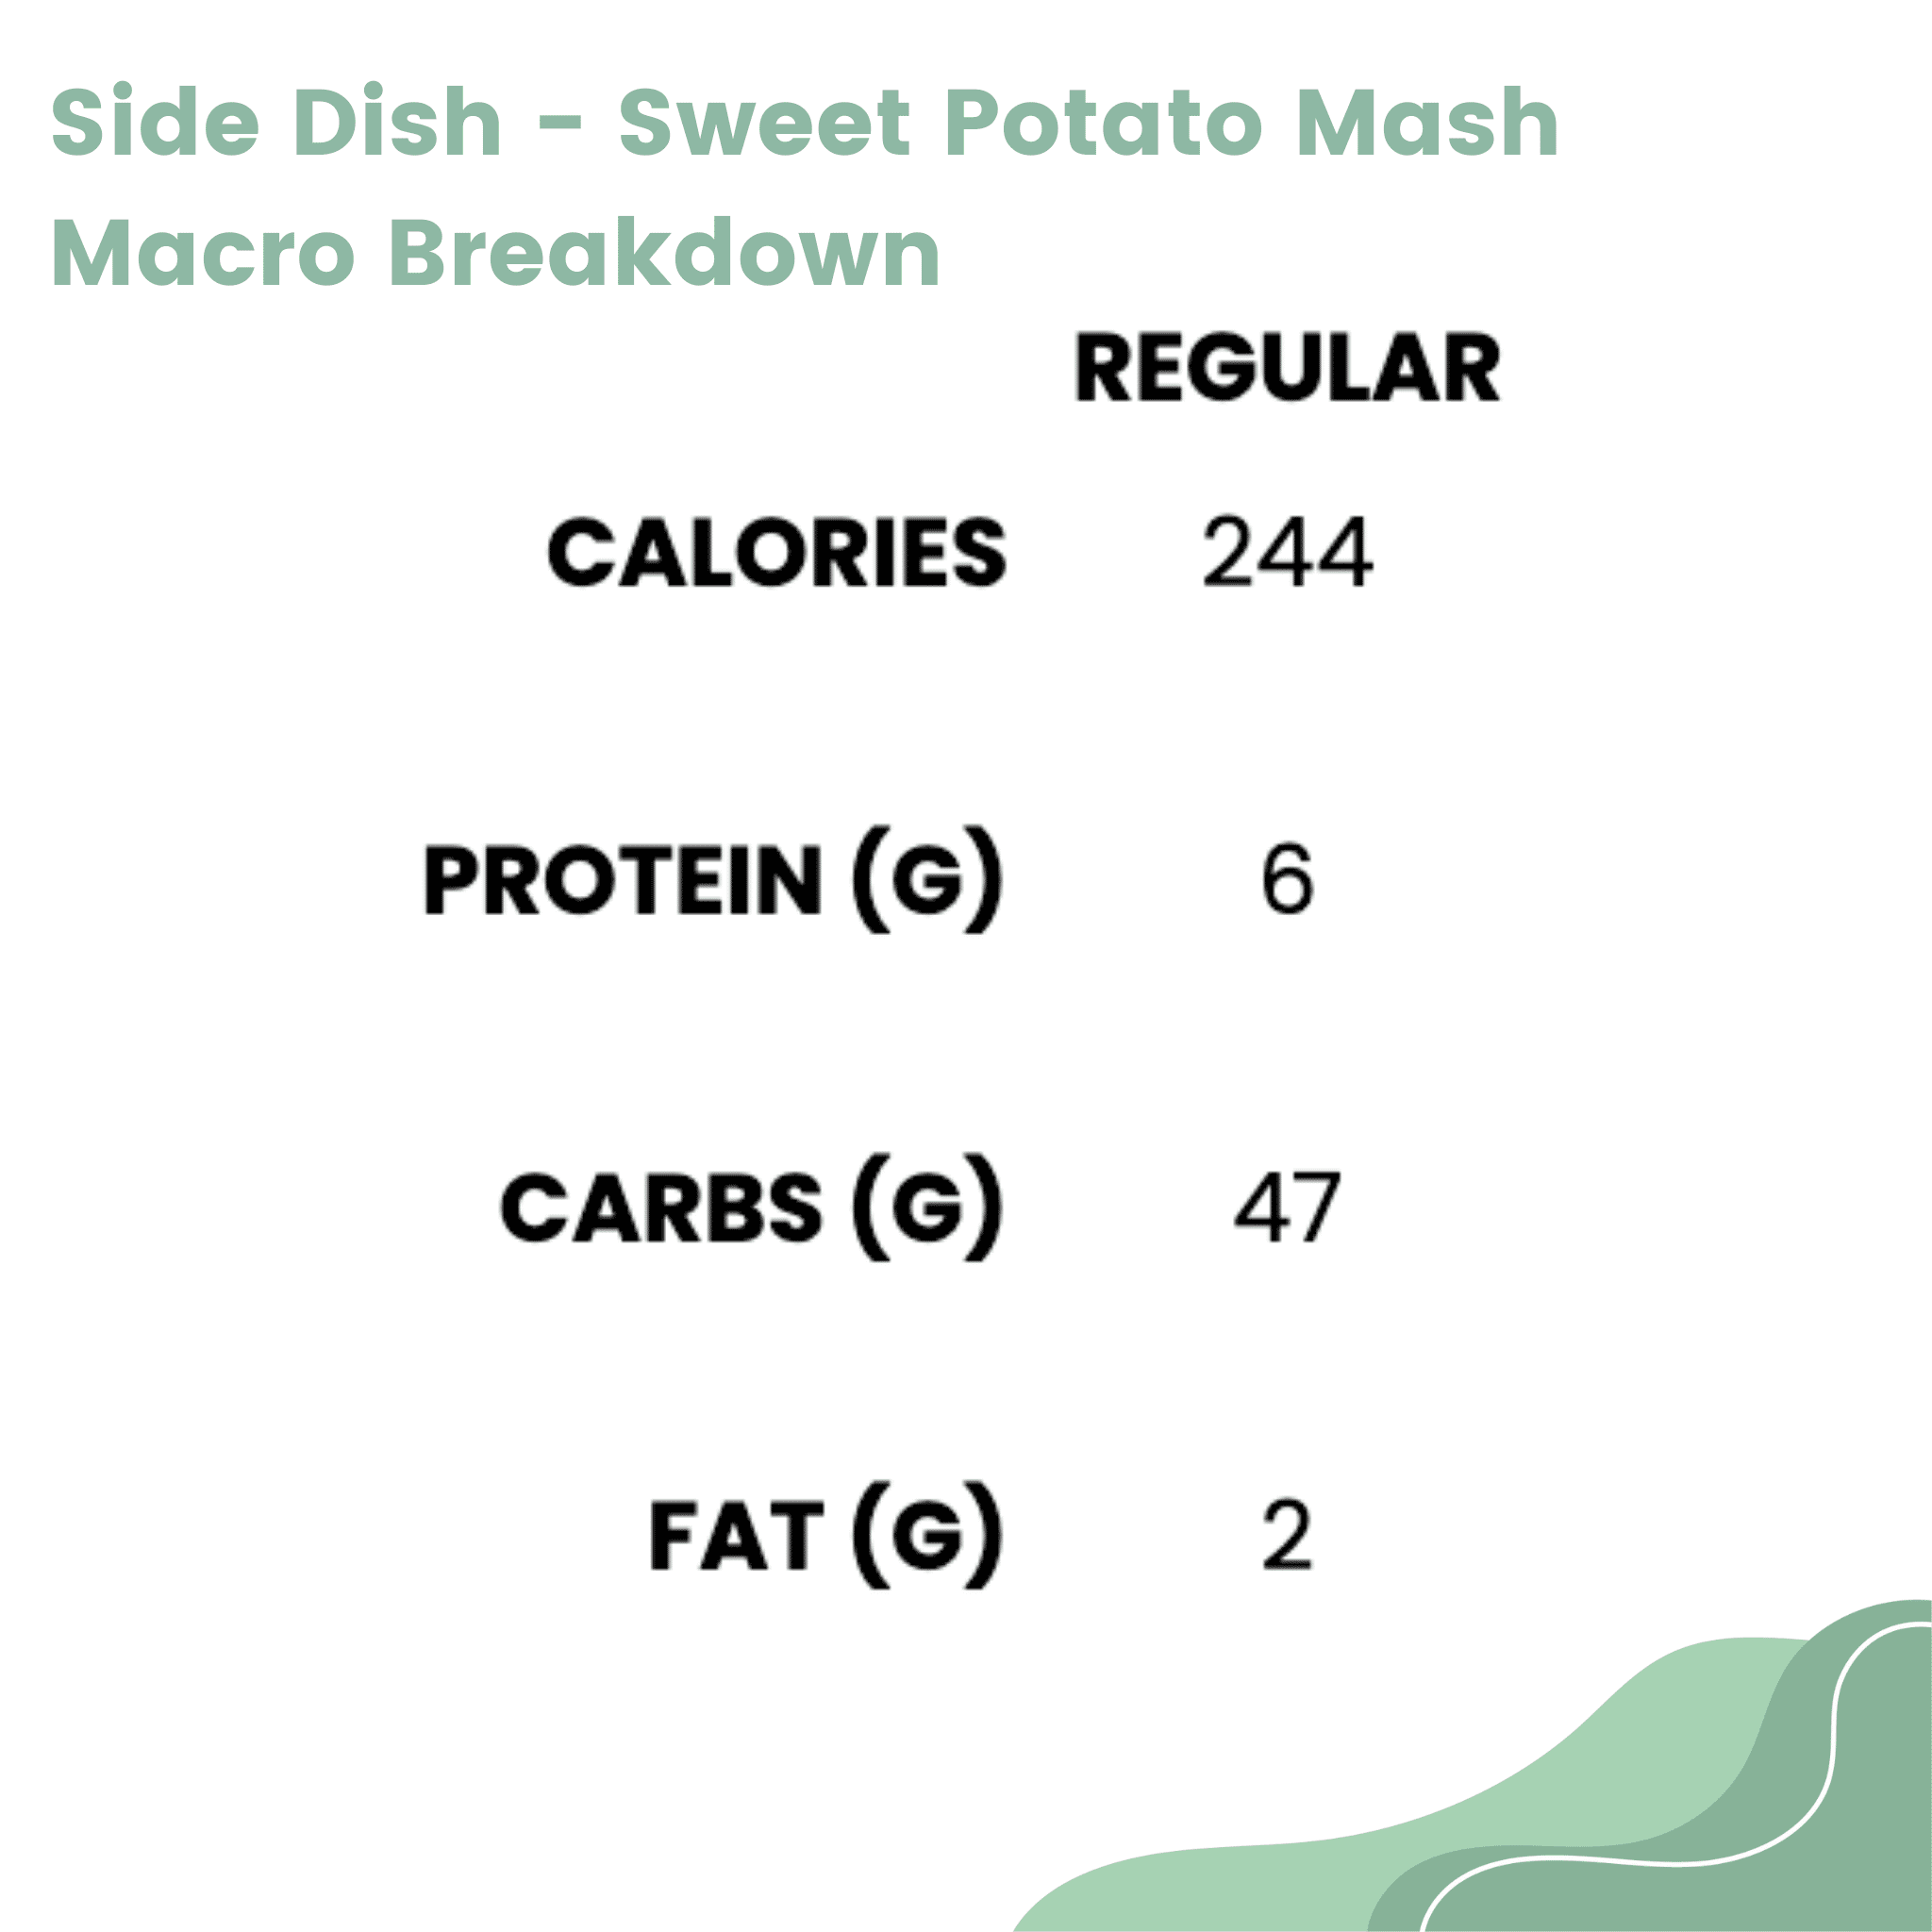 Side Dish - Sweet Potato Mash